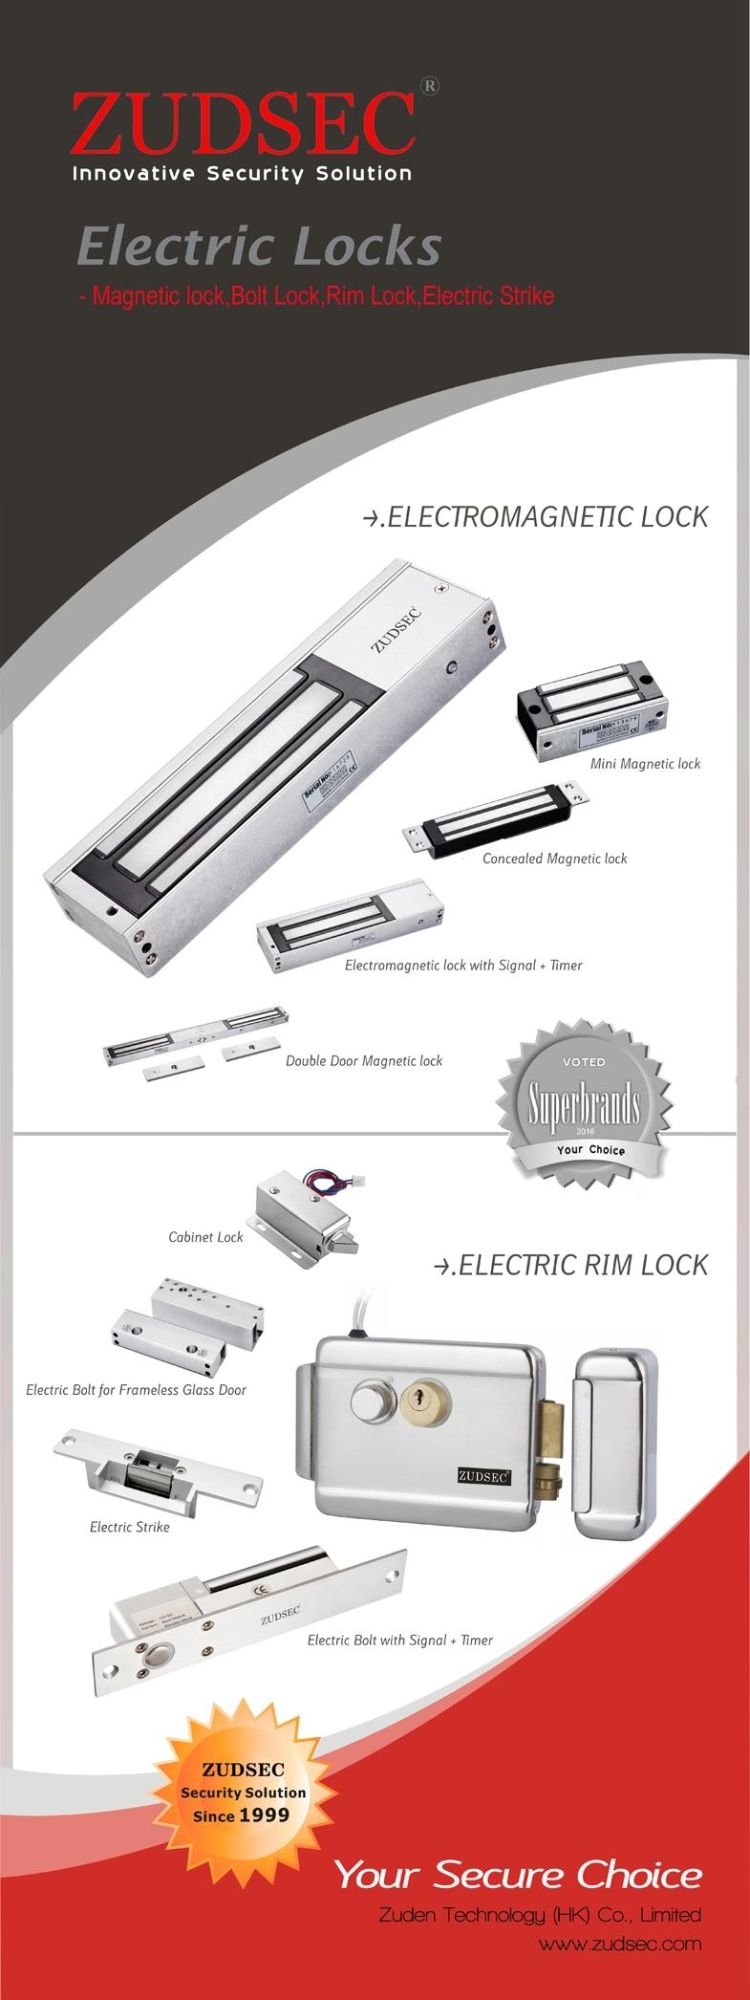 Aluminium Alloy Bracket for Frameless Glass Door Electric Bolt Lock